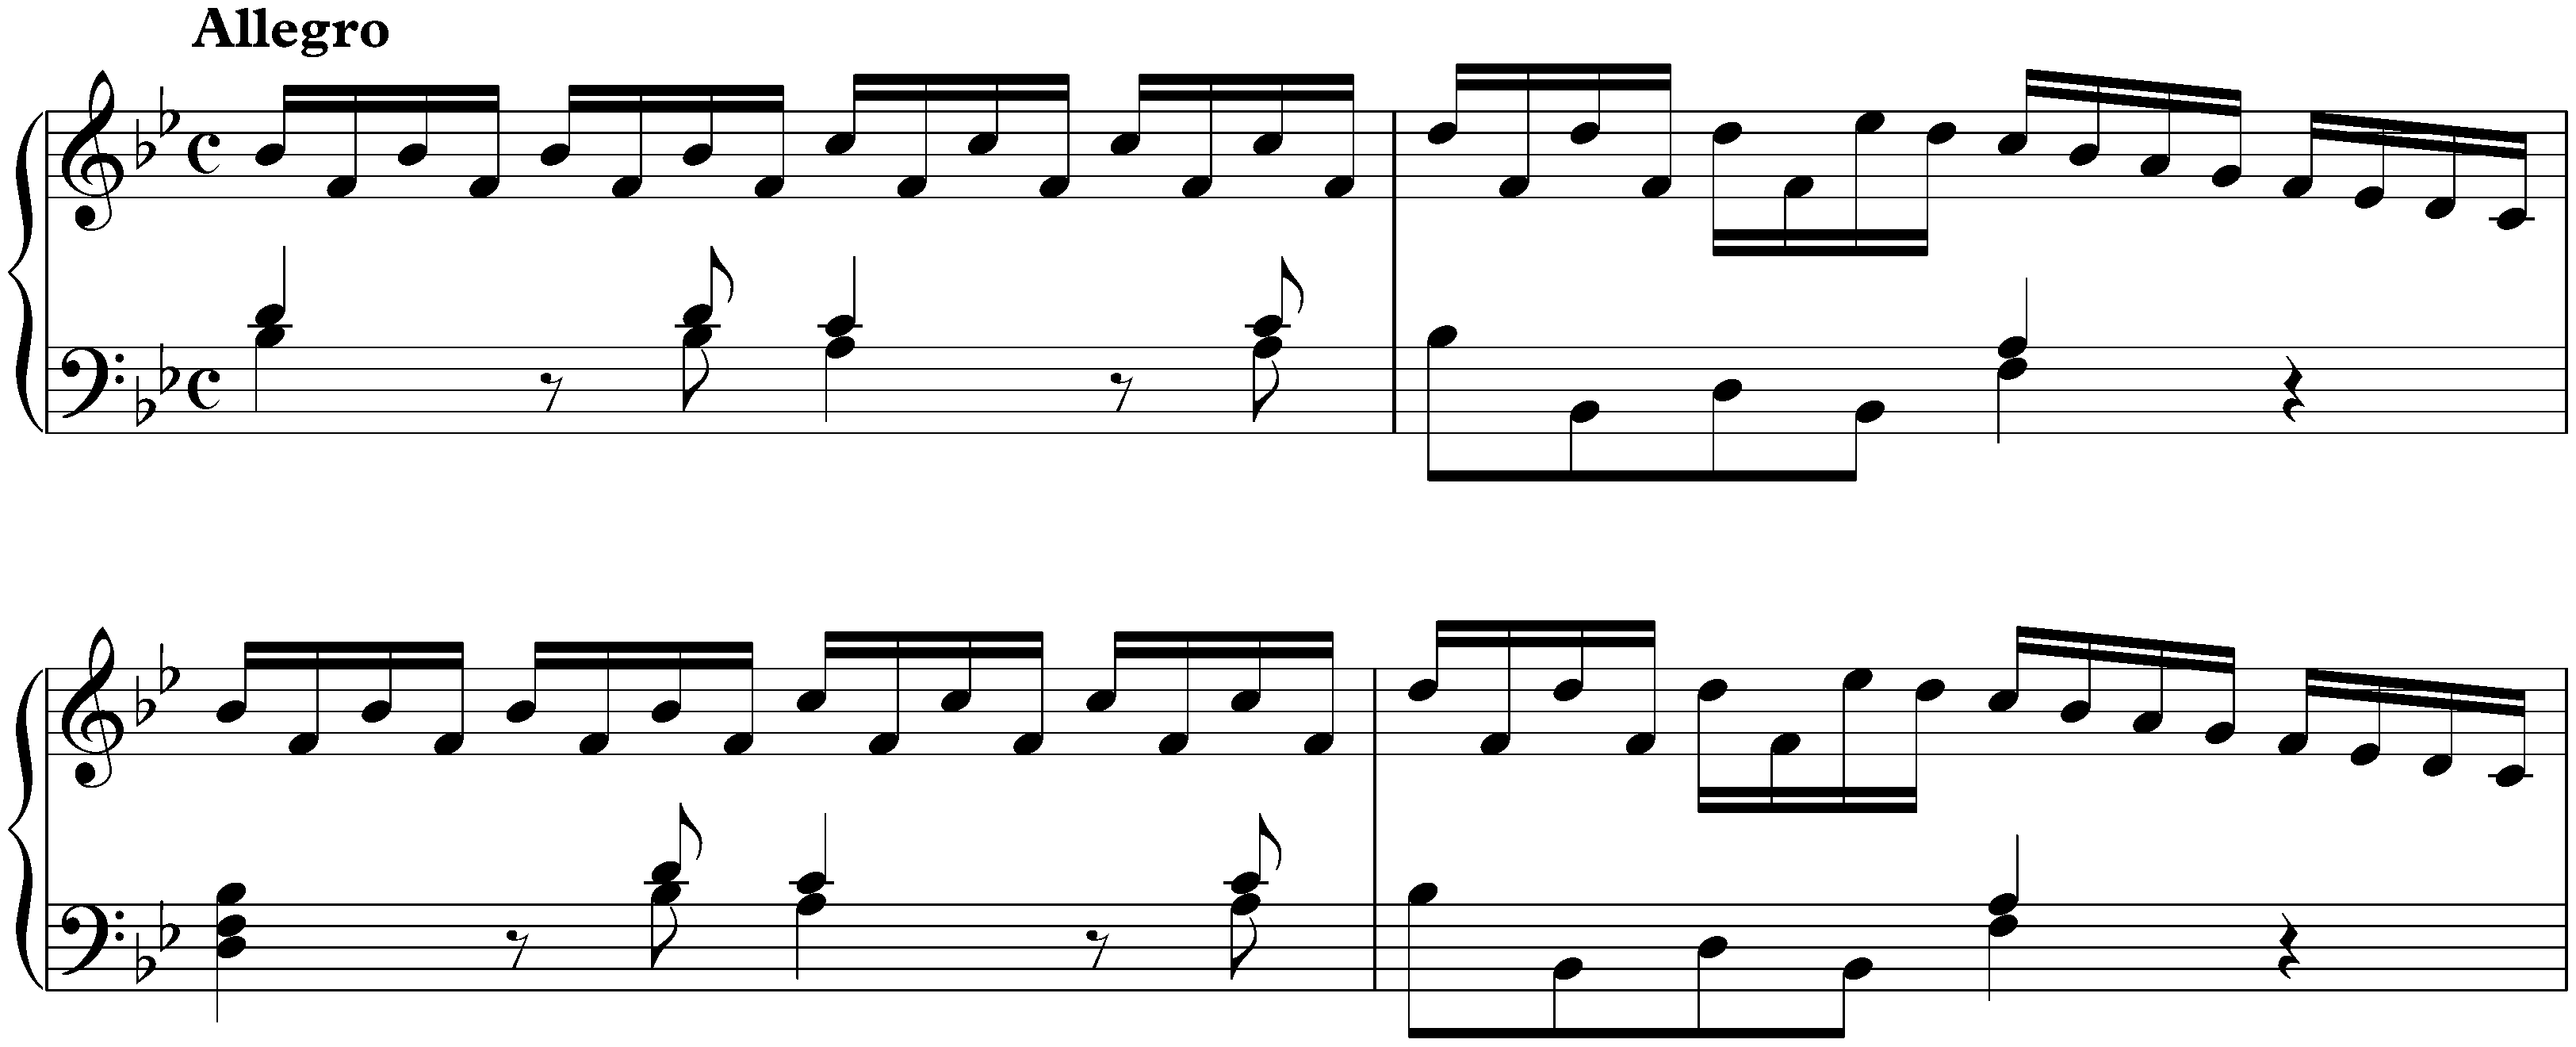 Suite in B-flat major, HWV 434; 2. Allegro (first version)